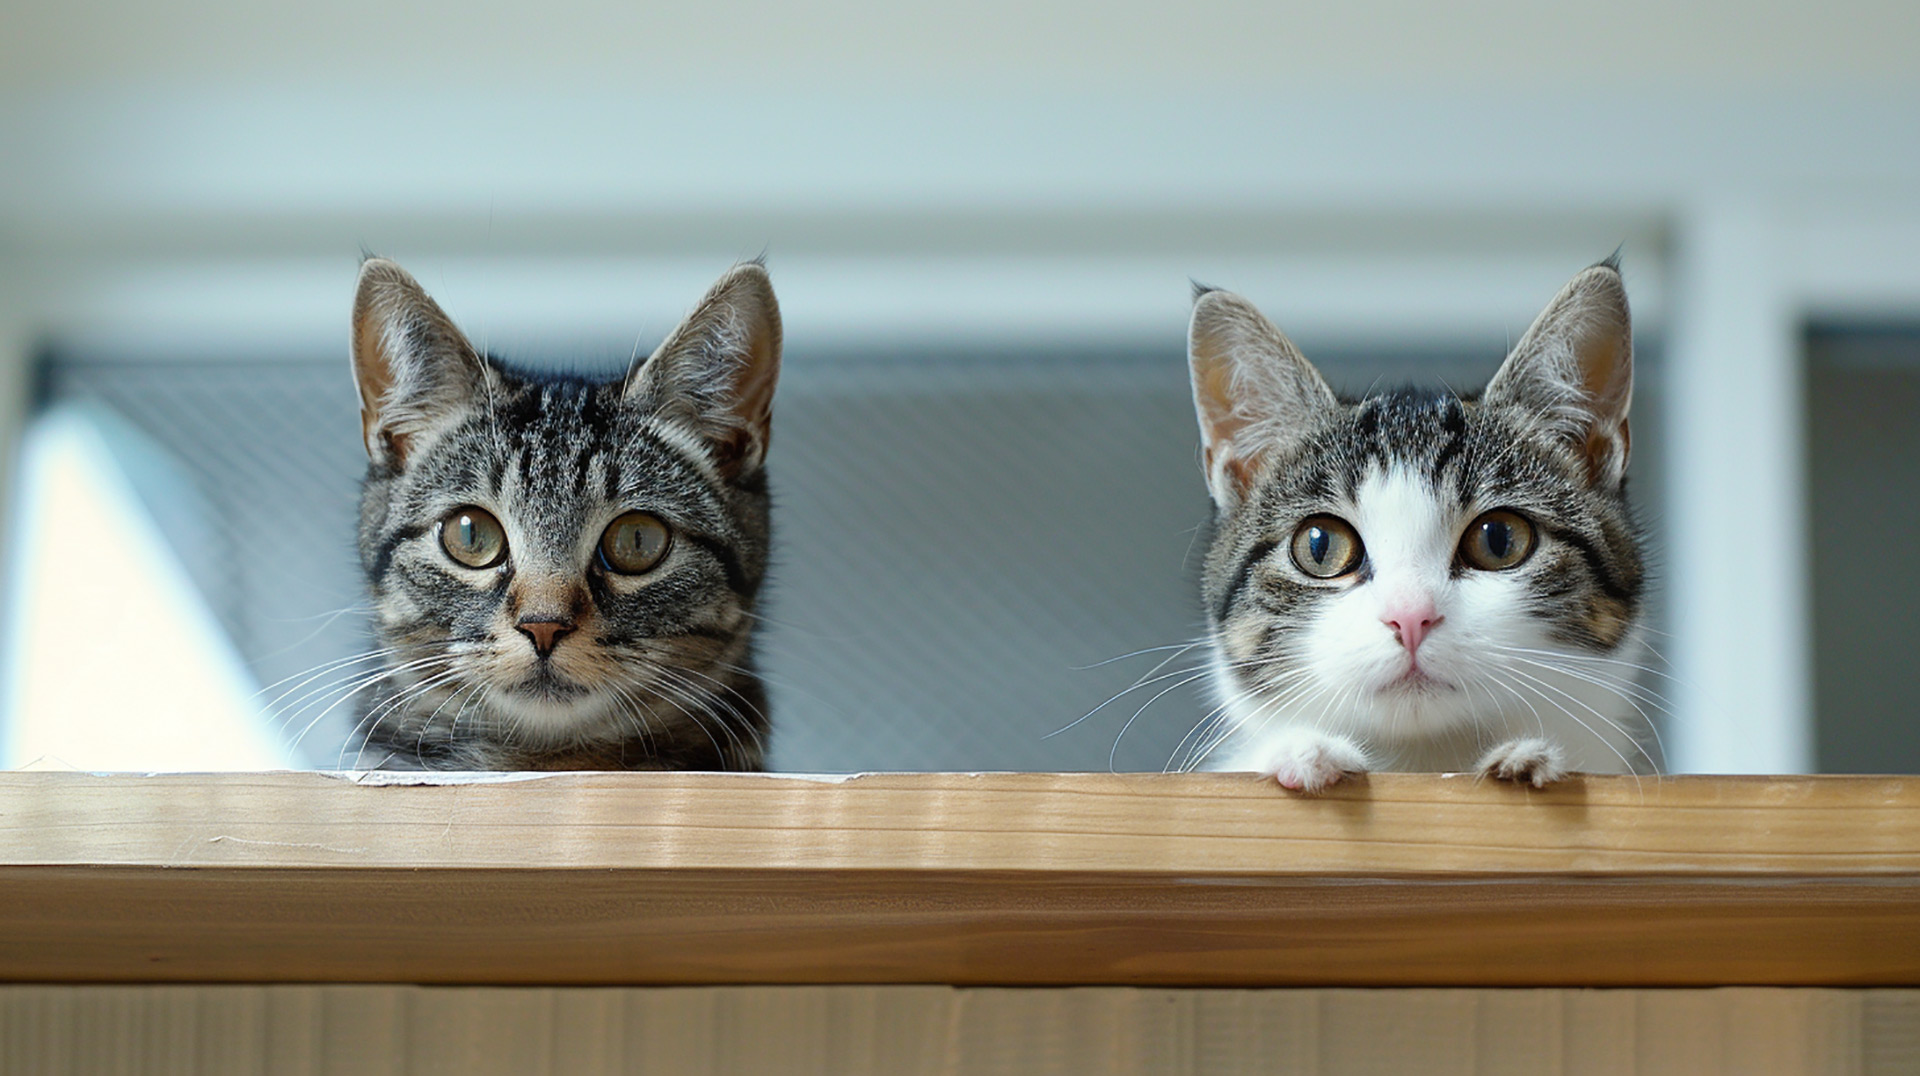 Download Free Cute Cat Desktop Backgrounds in 4K